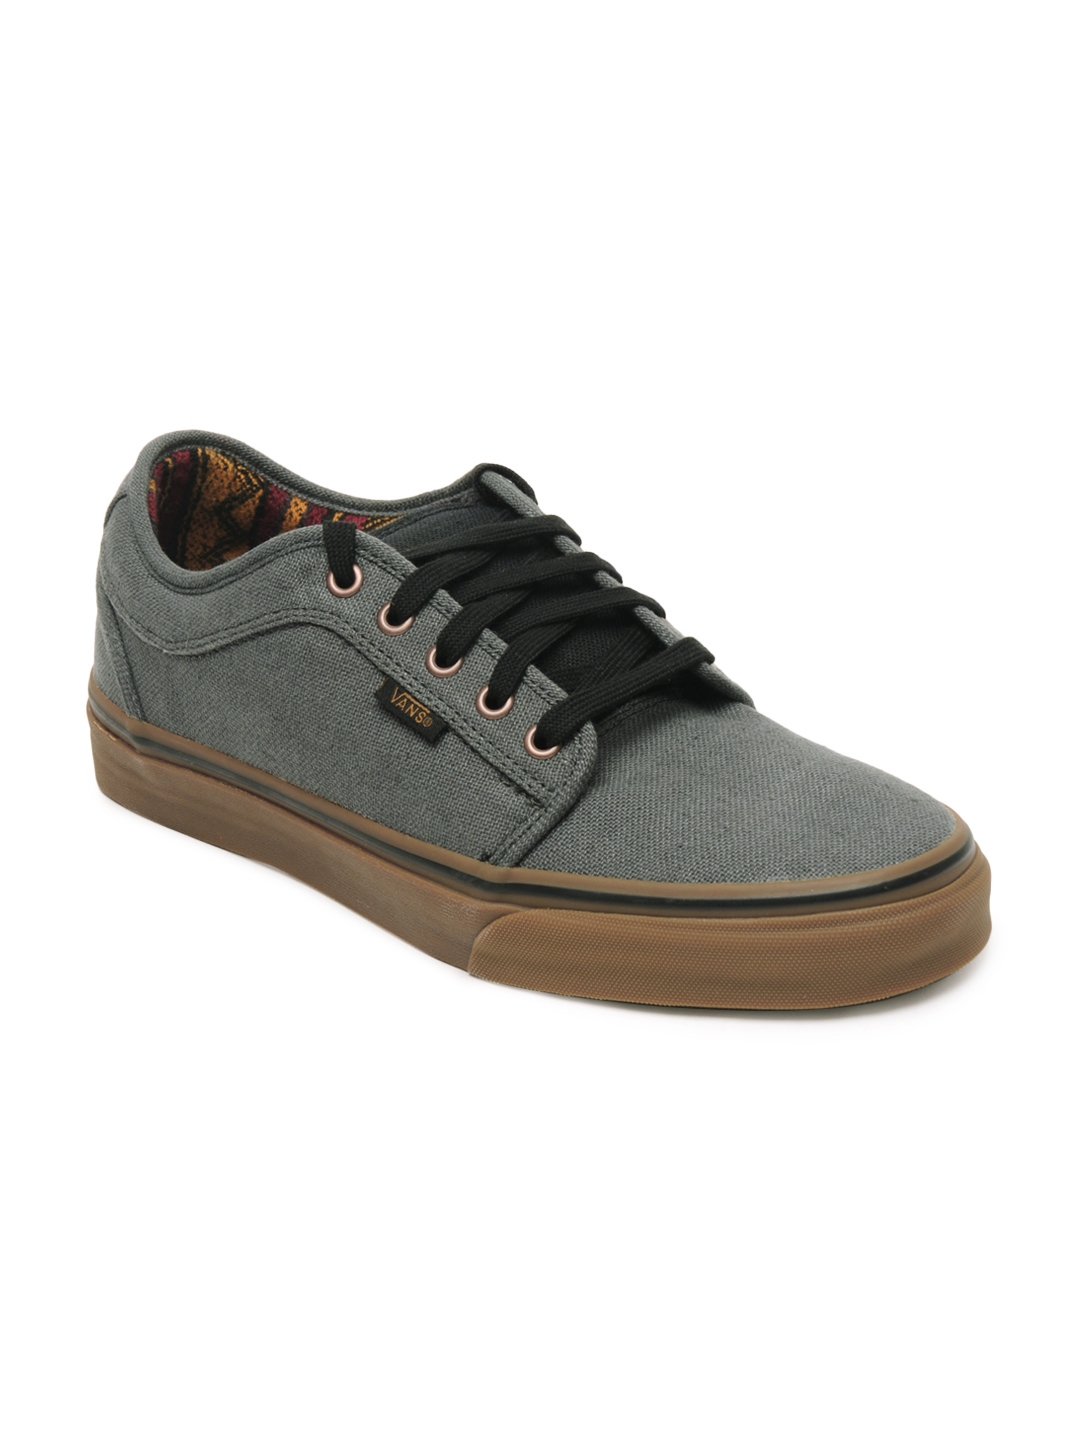 Buy Vans Men Grey Casual Shoes - Casual Shoes for Men 159030 | Myntra